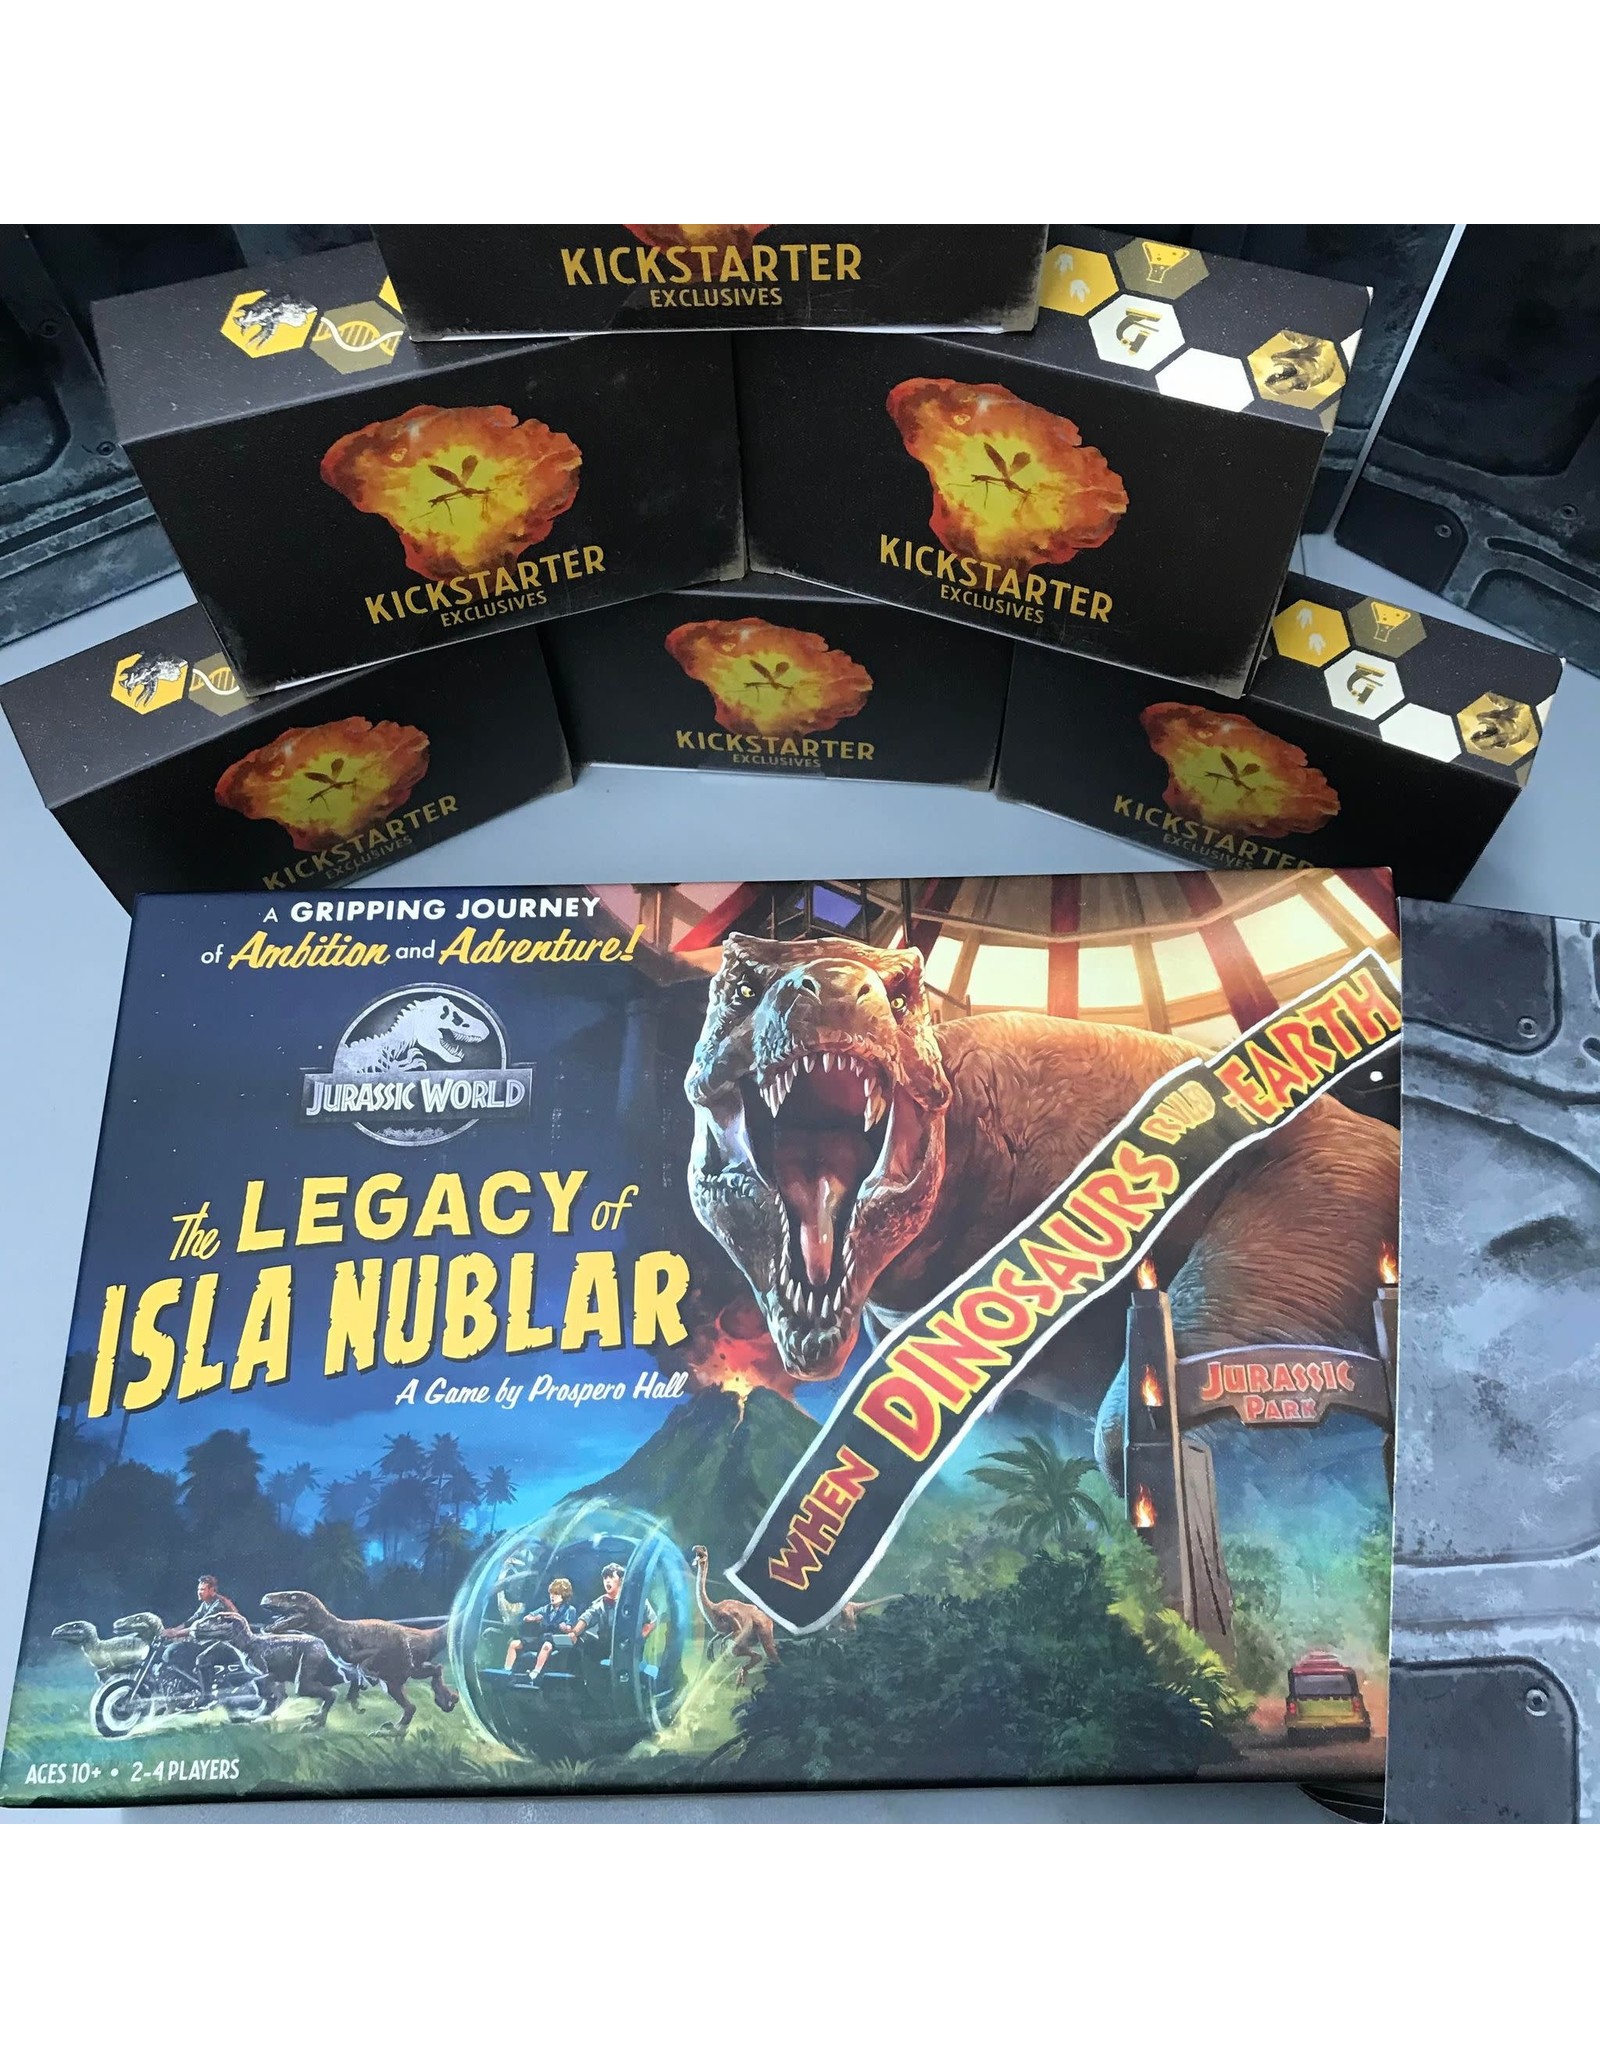 Jurassic World: The Legacy of Isla Nublar + Kickstarter Exclusives